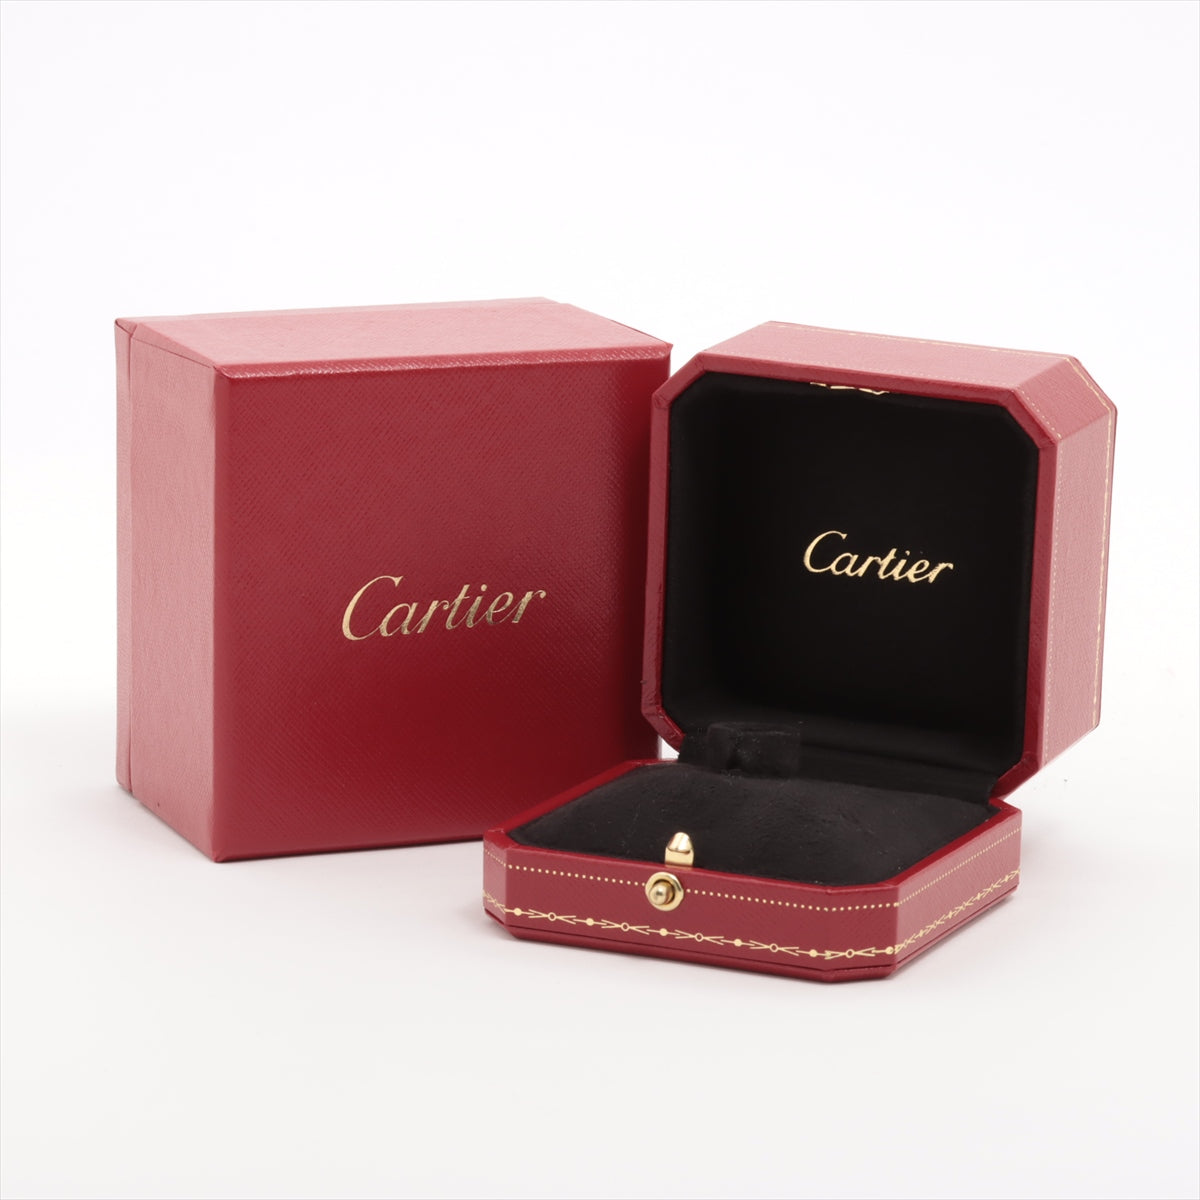 Cartier C2 Diamond Ring 750 (WG) 6.8g 49 E